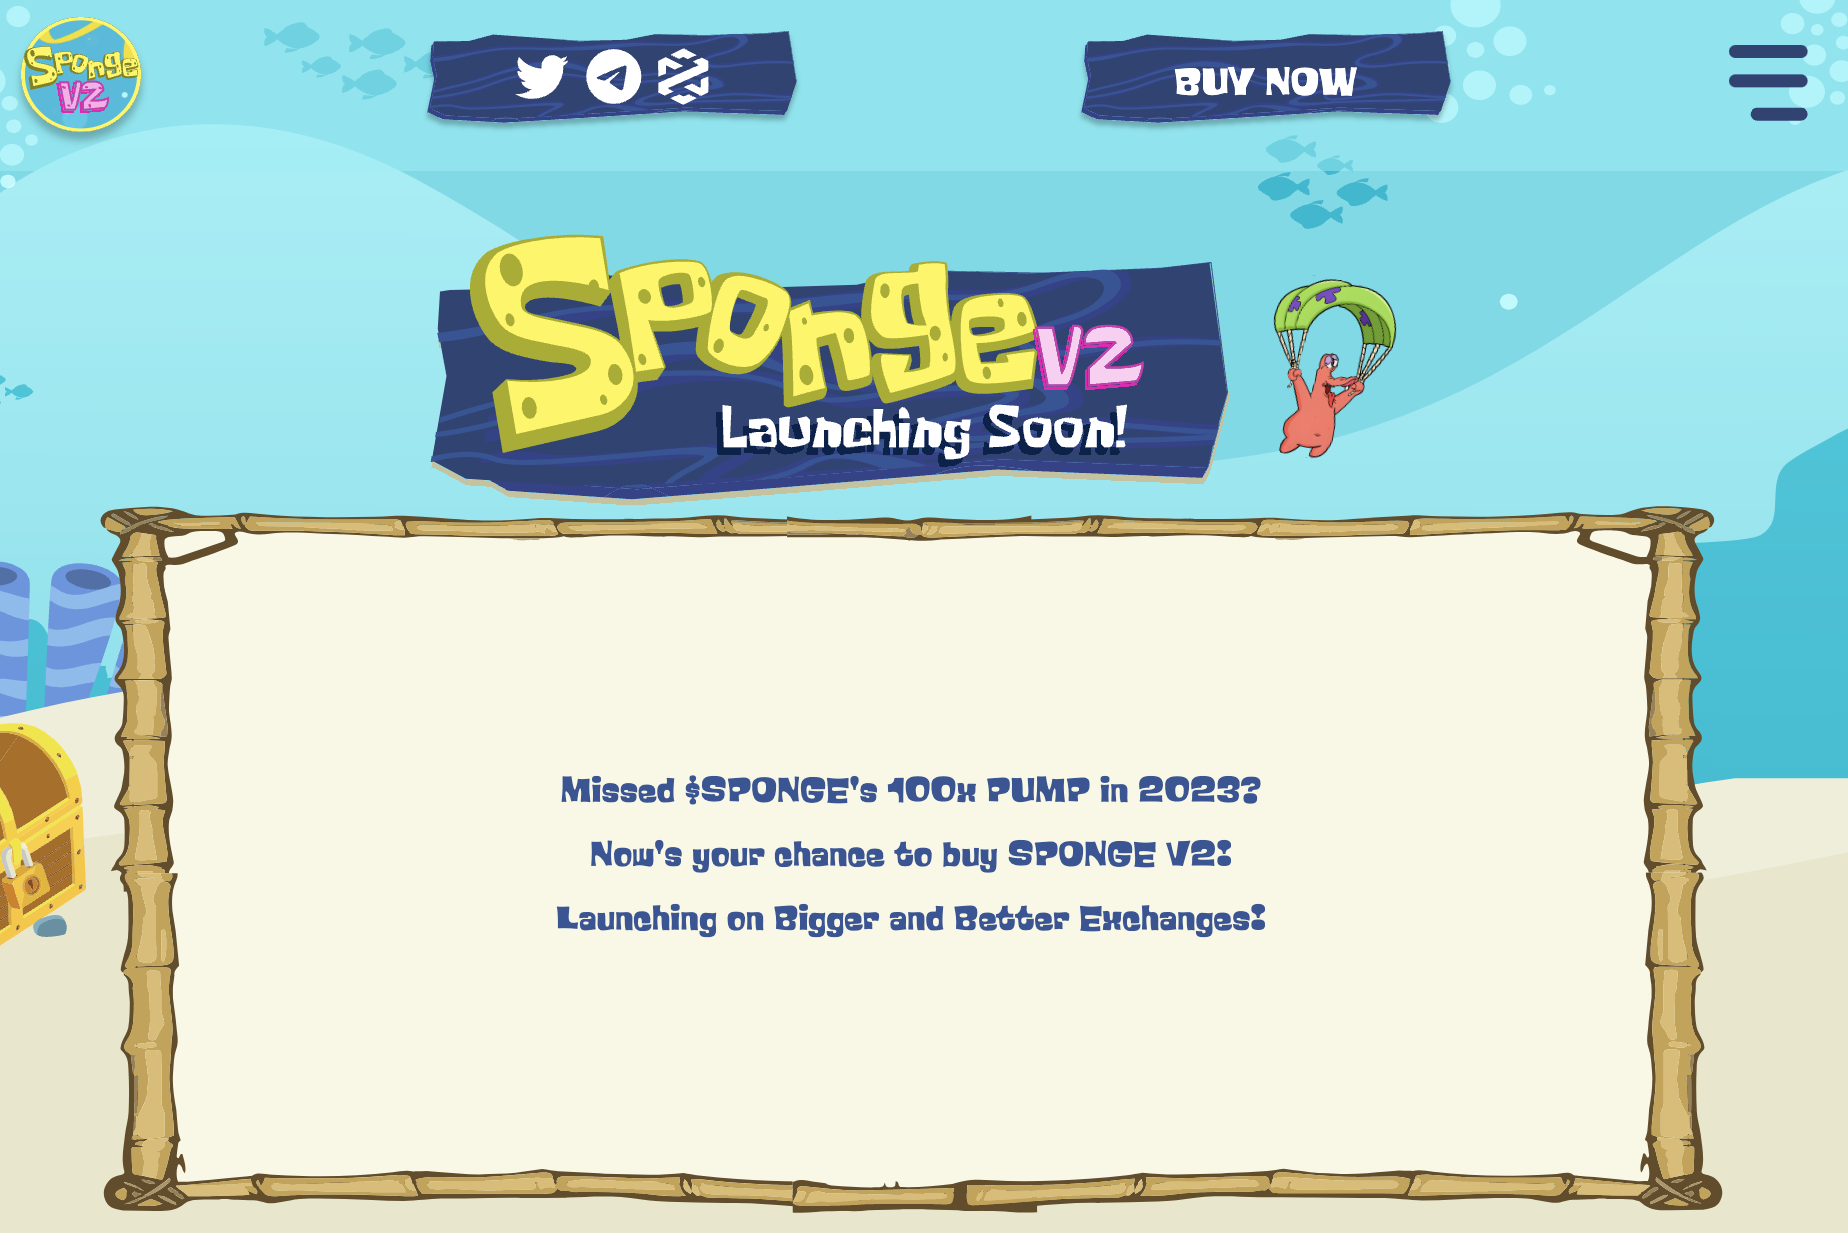 Visit Sponge website